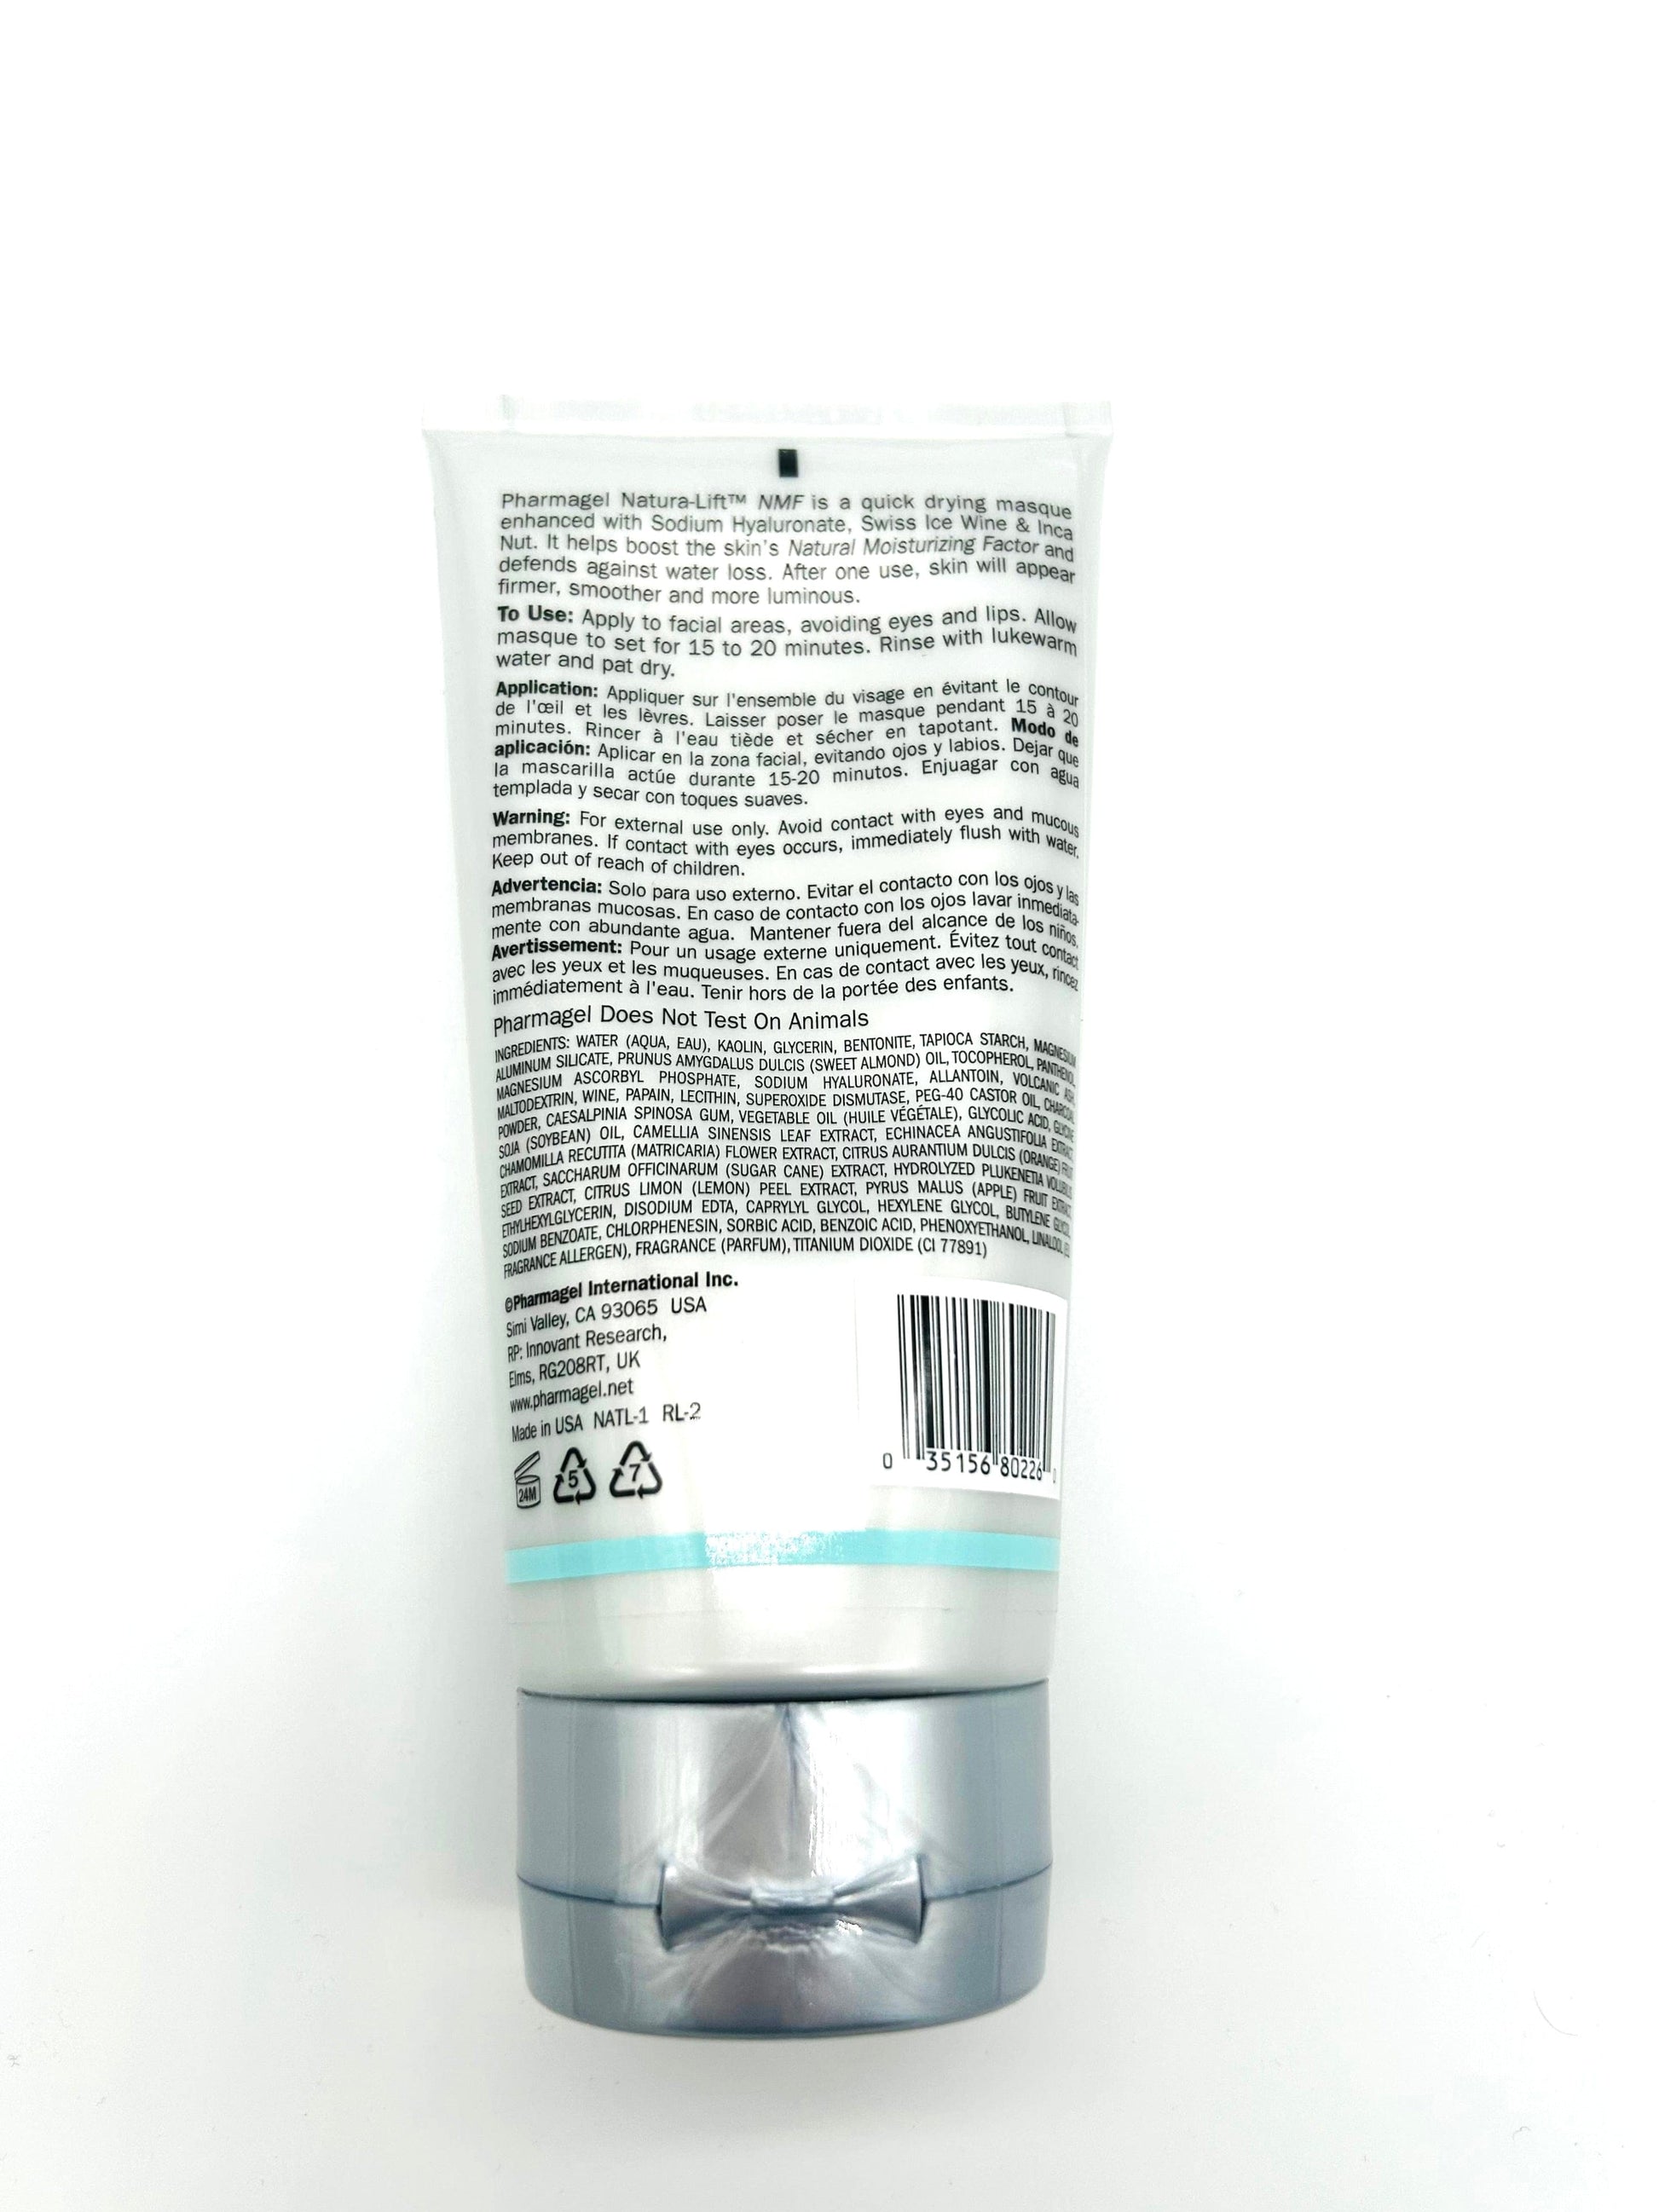 Pharmagel Natura-Lift Hydrating Lift Masque 6 oz Face Mask